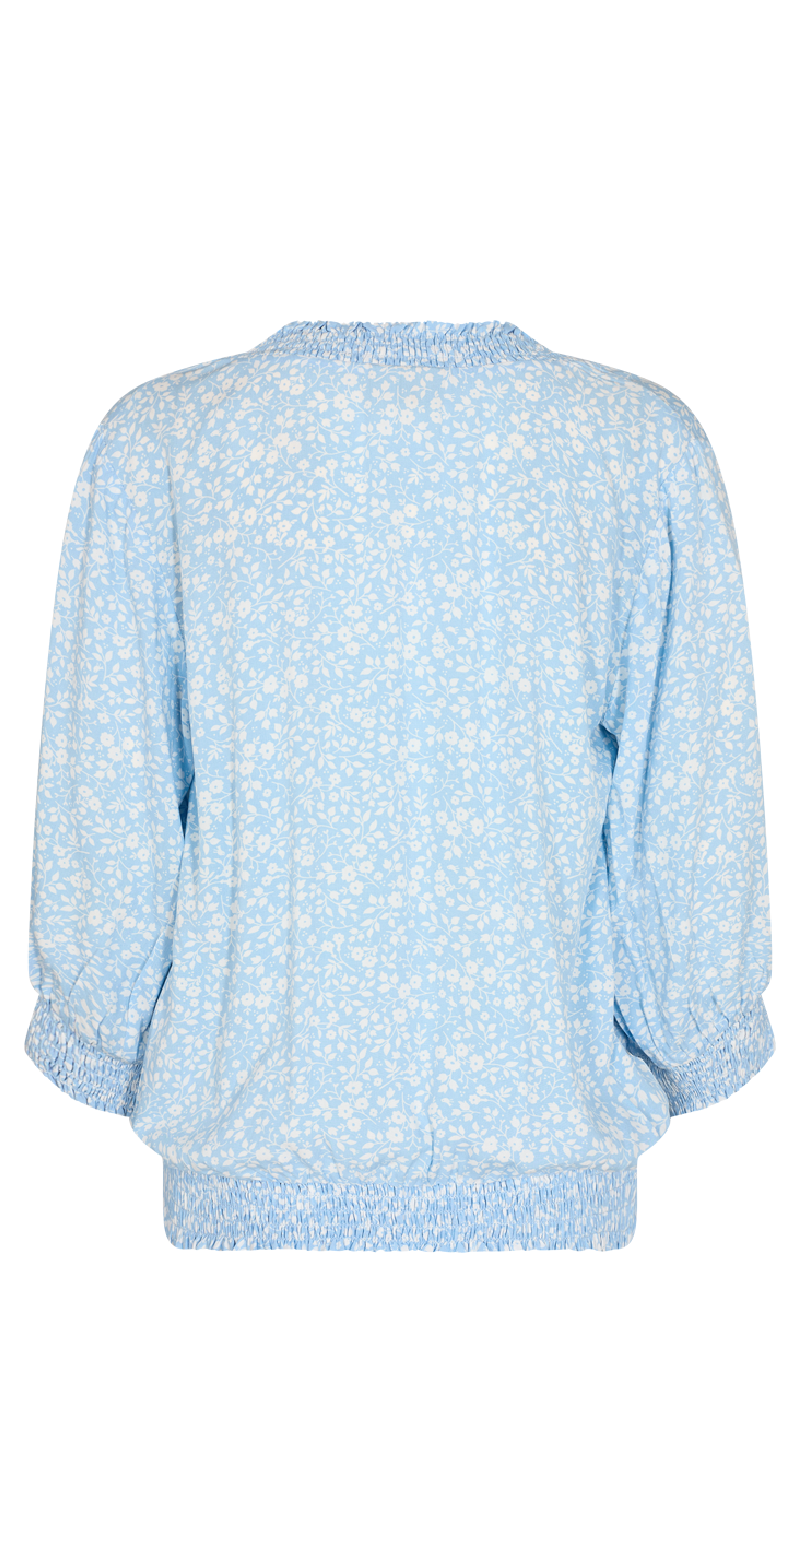 Adney bluse med blomsterprint chambray blue w. offwhite